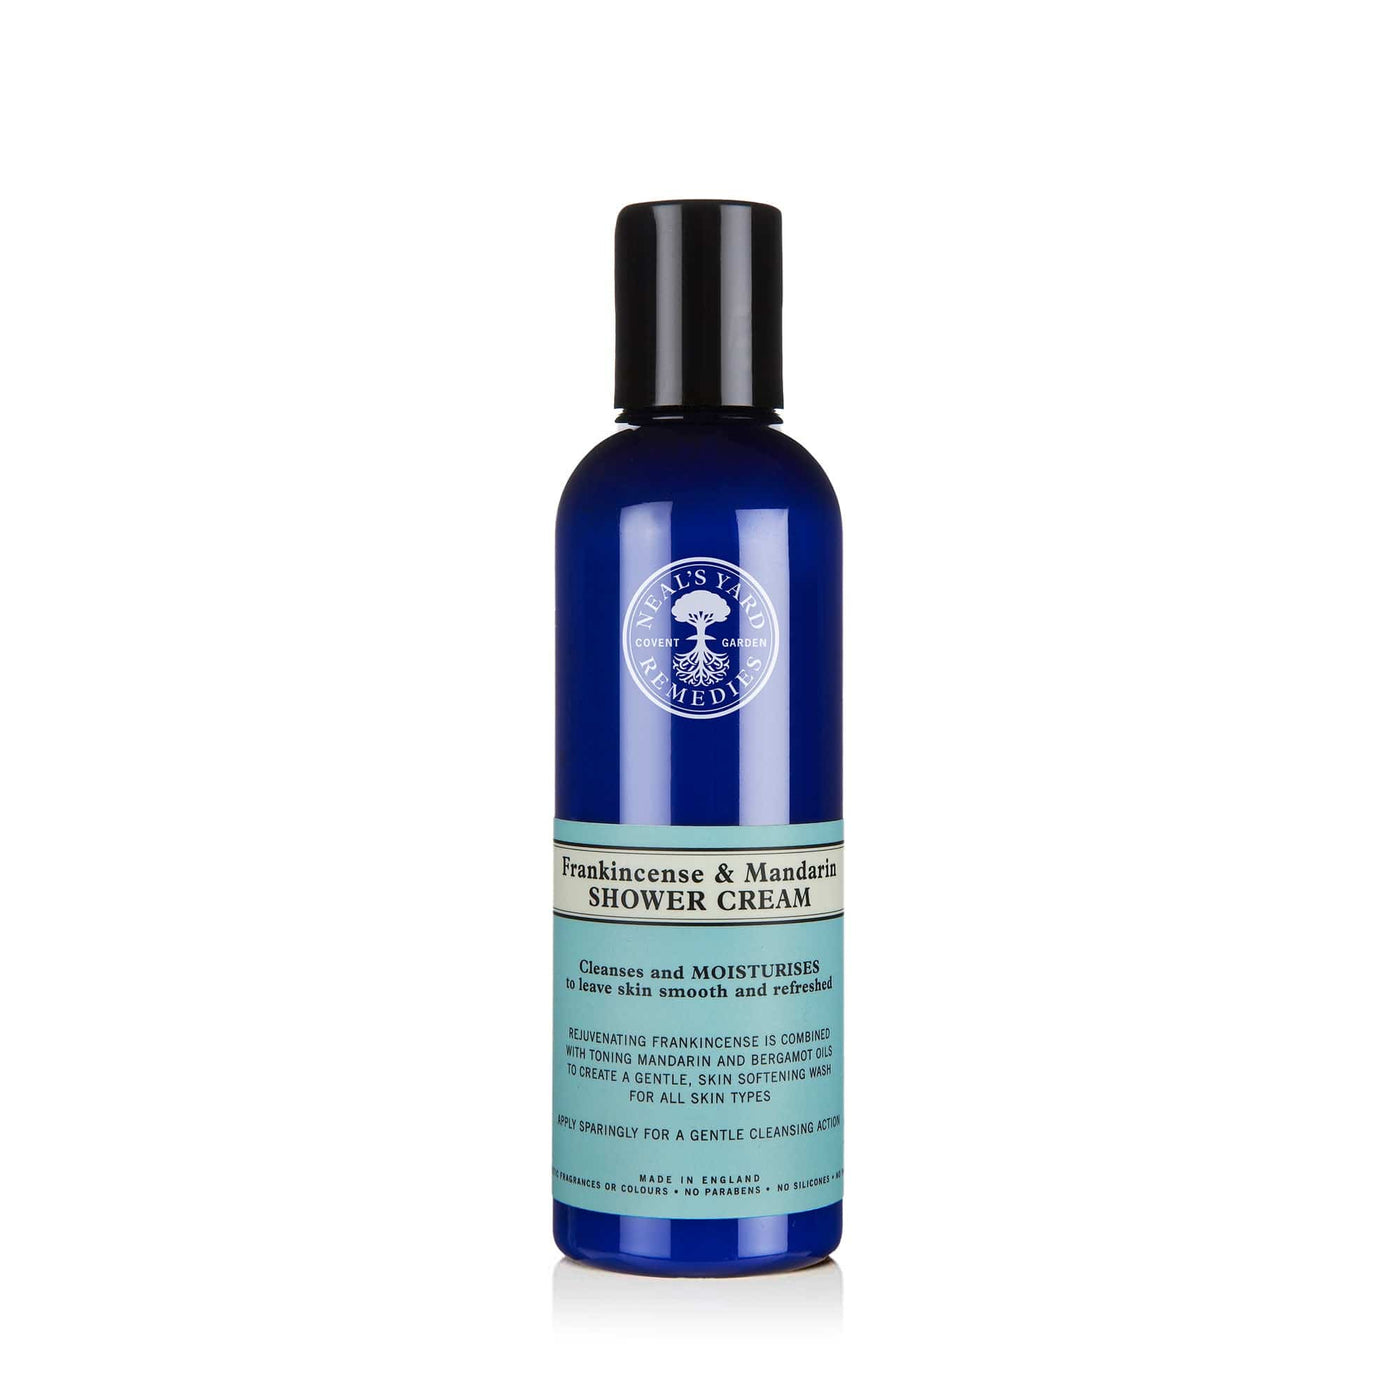 Neal's Yard Remedies Frankincense & Mandarin Shower Cream 200ml